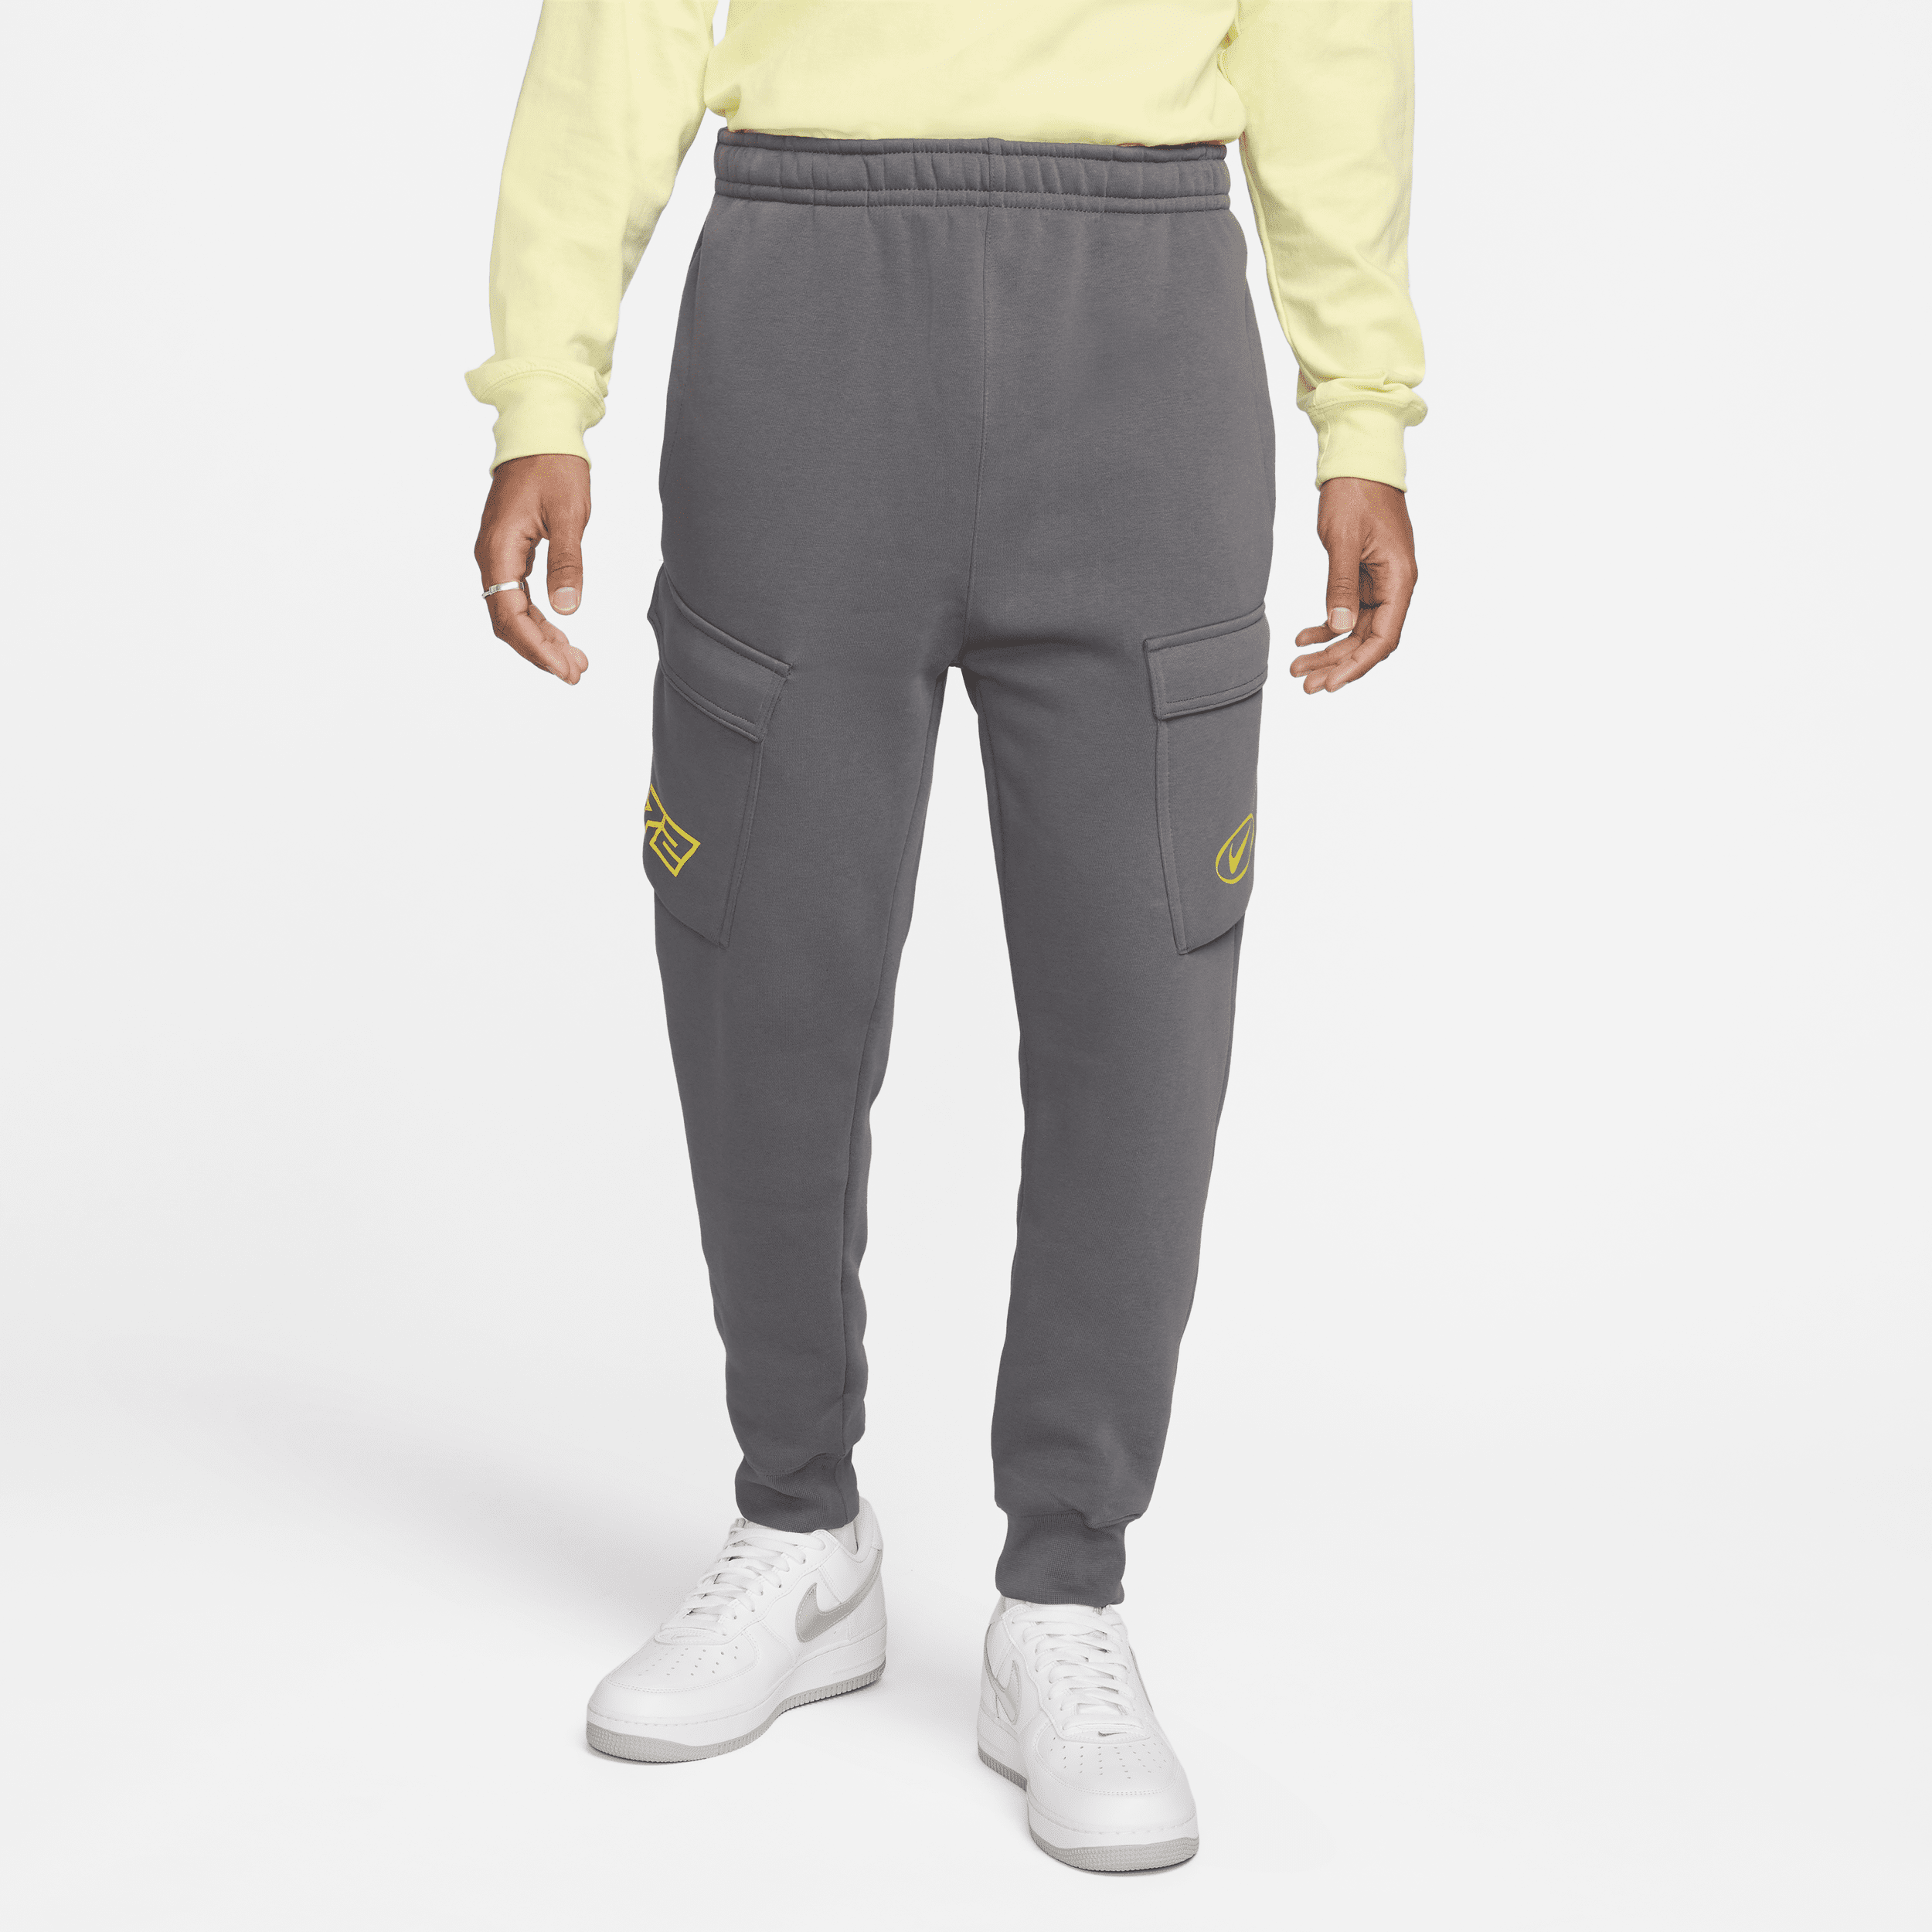 Nike Sportswear-cargobukser i fleece til mænd - grå